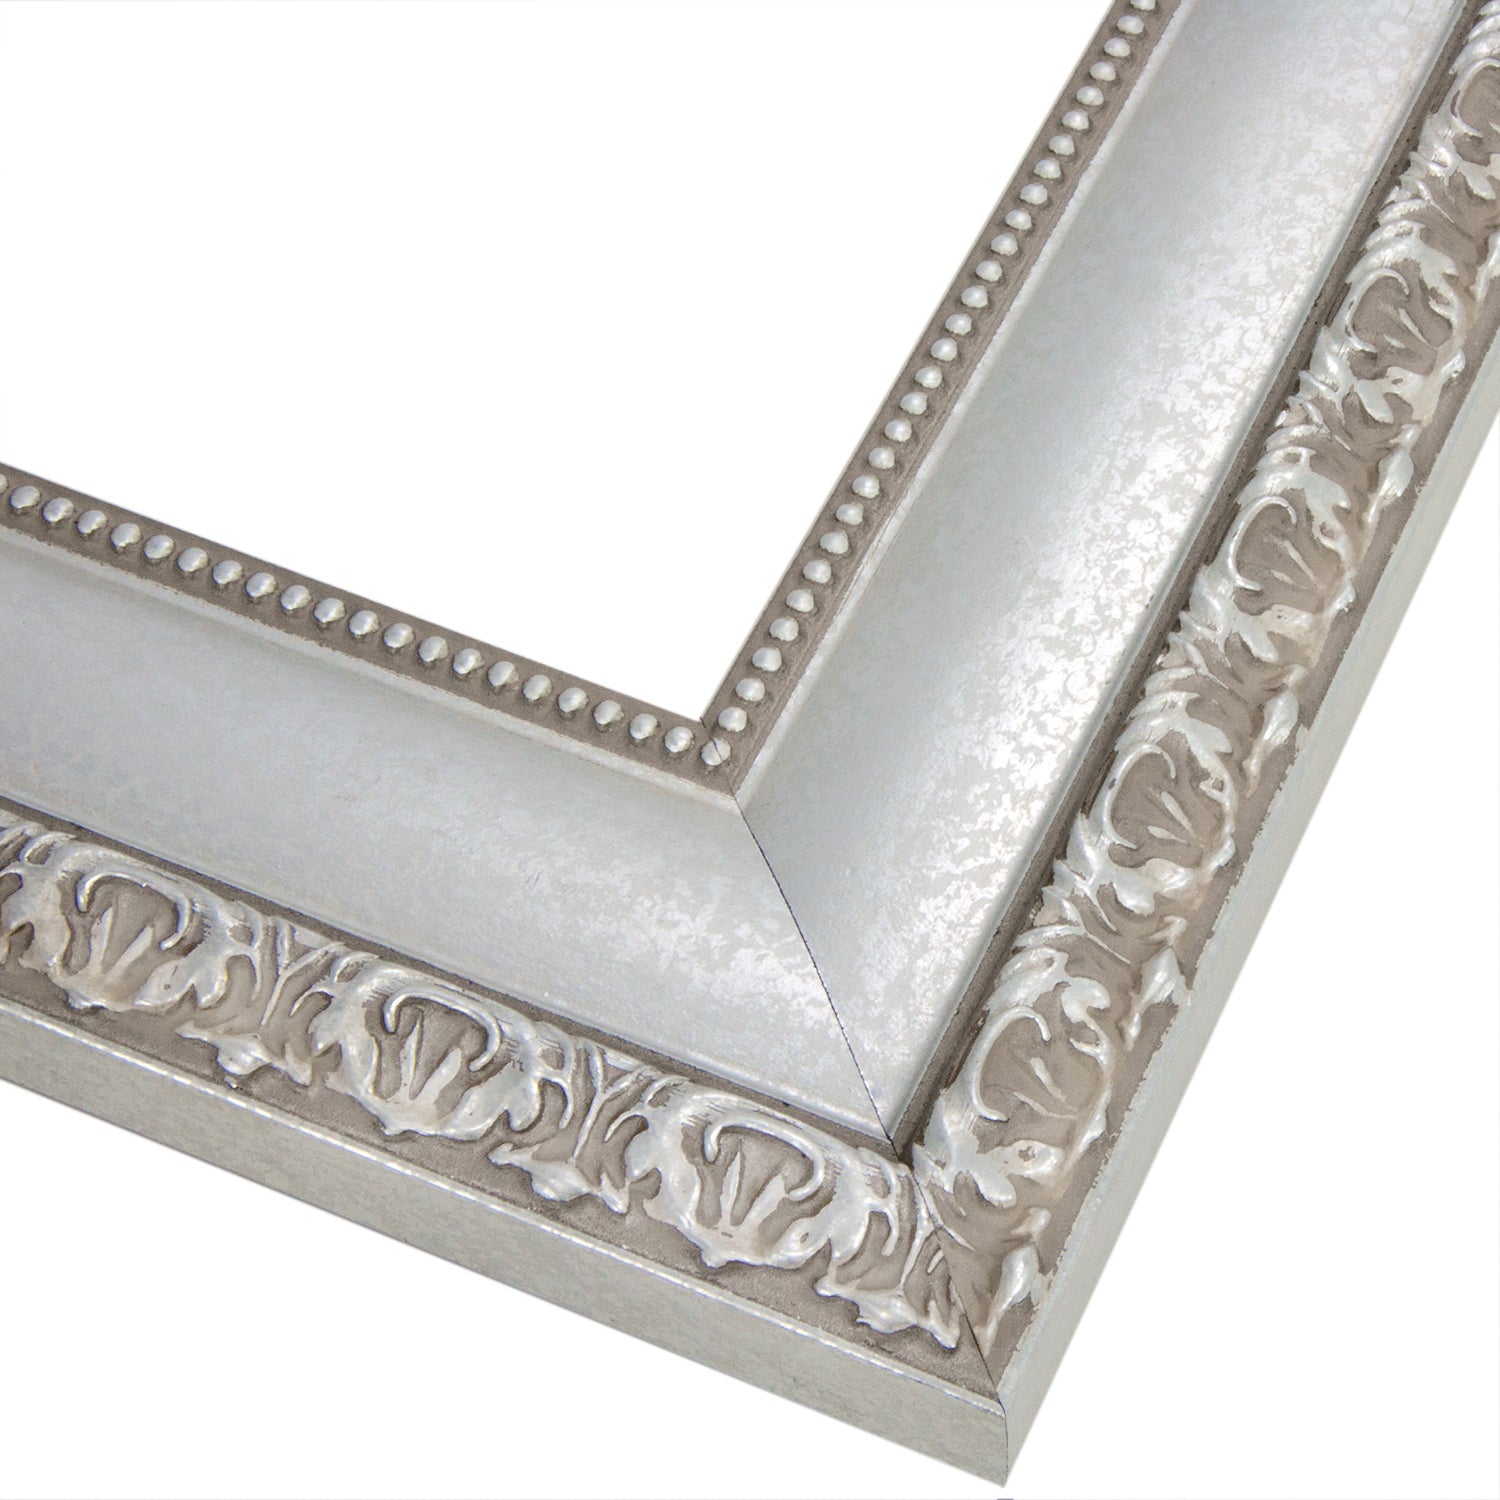 Ornate Silver Mirror Frames | Vintage Silver Mirror Framing – MirrorMate